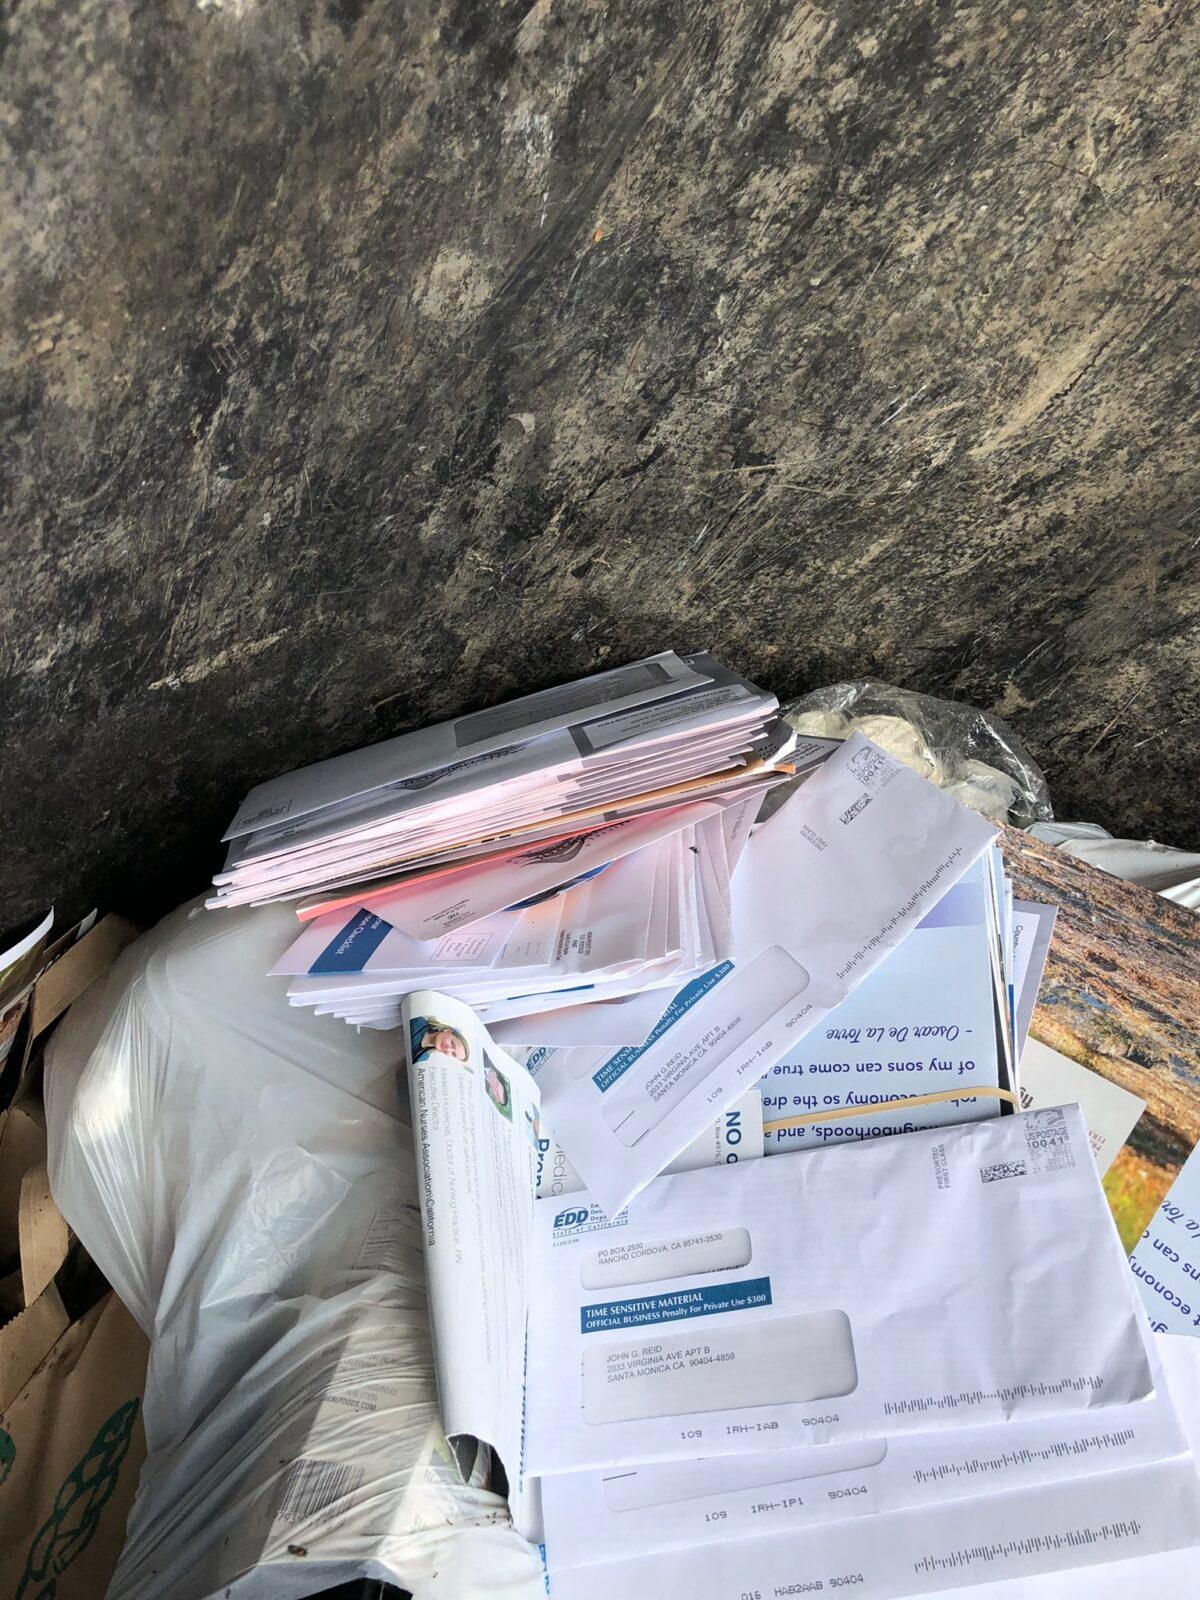 Discarded mail found in Santa Monica, Calif., Oct. 8, 2020. (Courtesy of Osvaldo Jiménez)